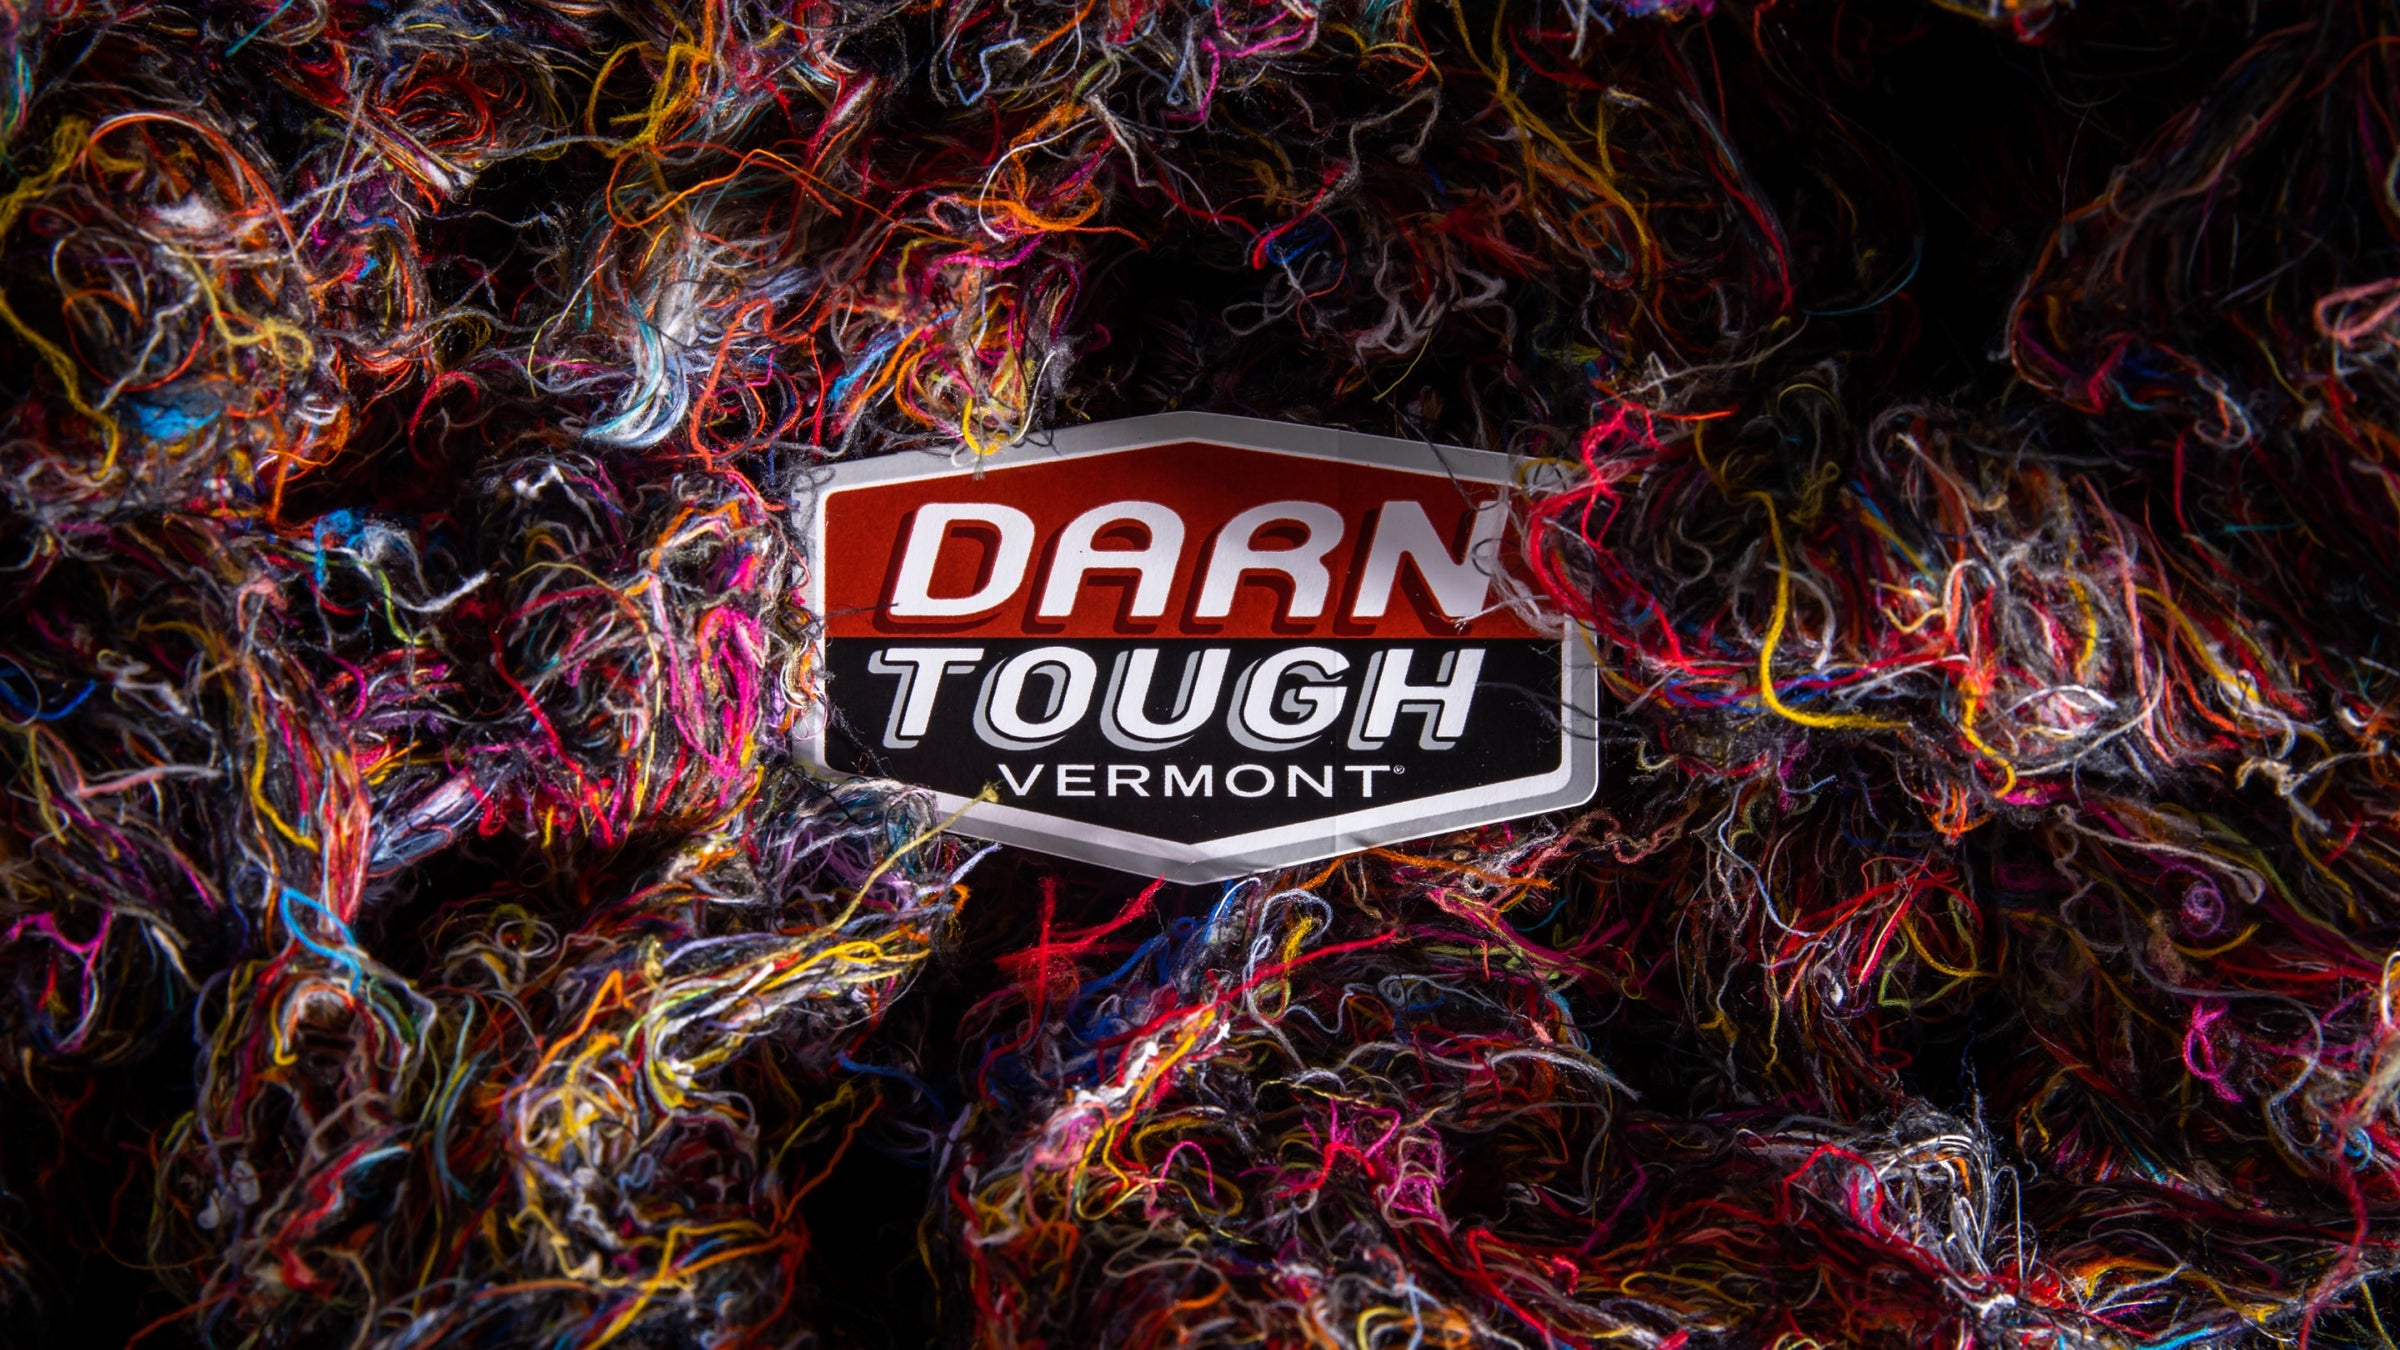 Darn Tough logo among Merino Wool fibers from making merino wool socks